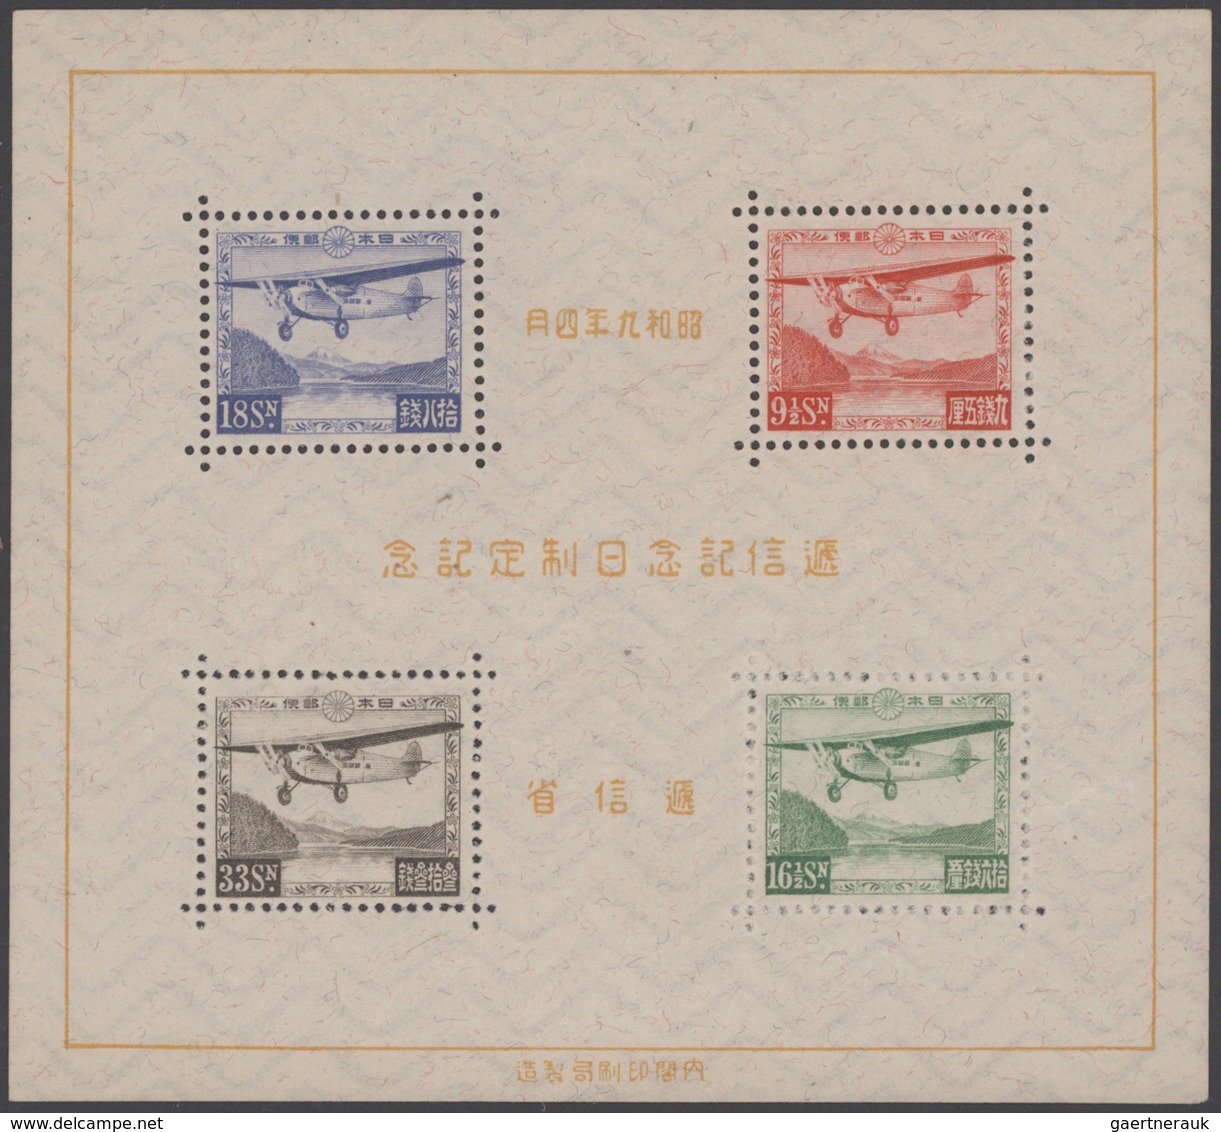 Asien: 1900/1970 (ca.), Balance On Stockcards, Incl. Some PRC, Japan 1934 Airmail Souvenir Sheet Min - Autres - Asie